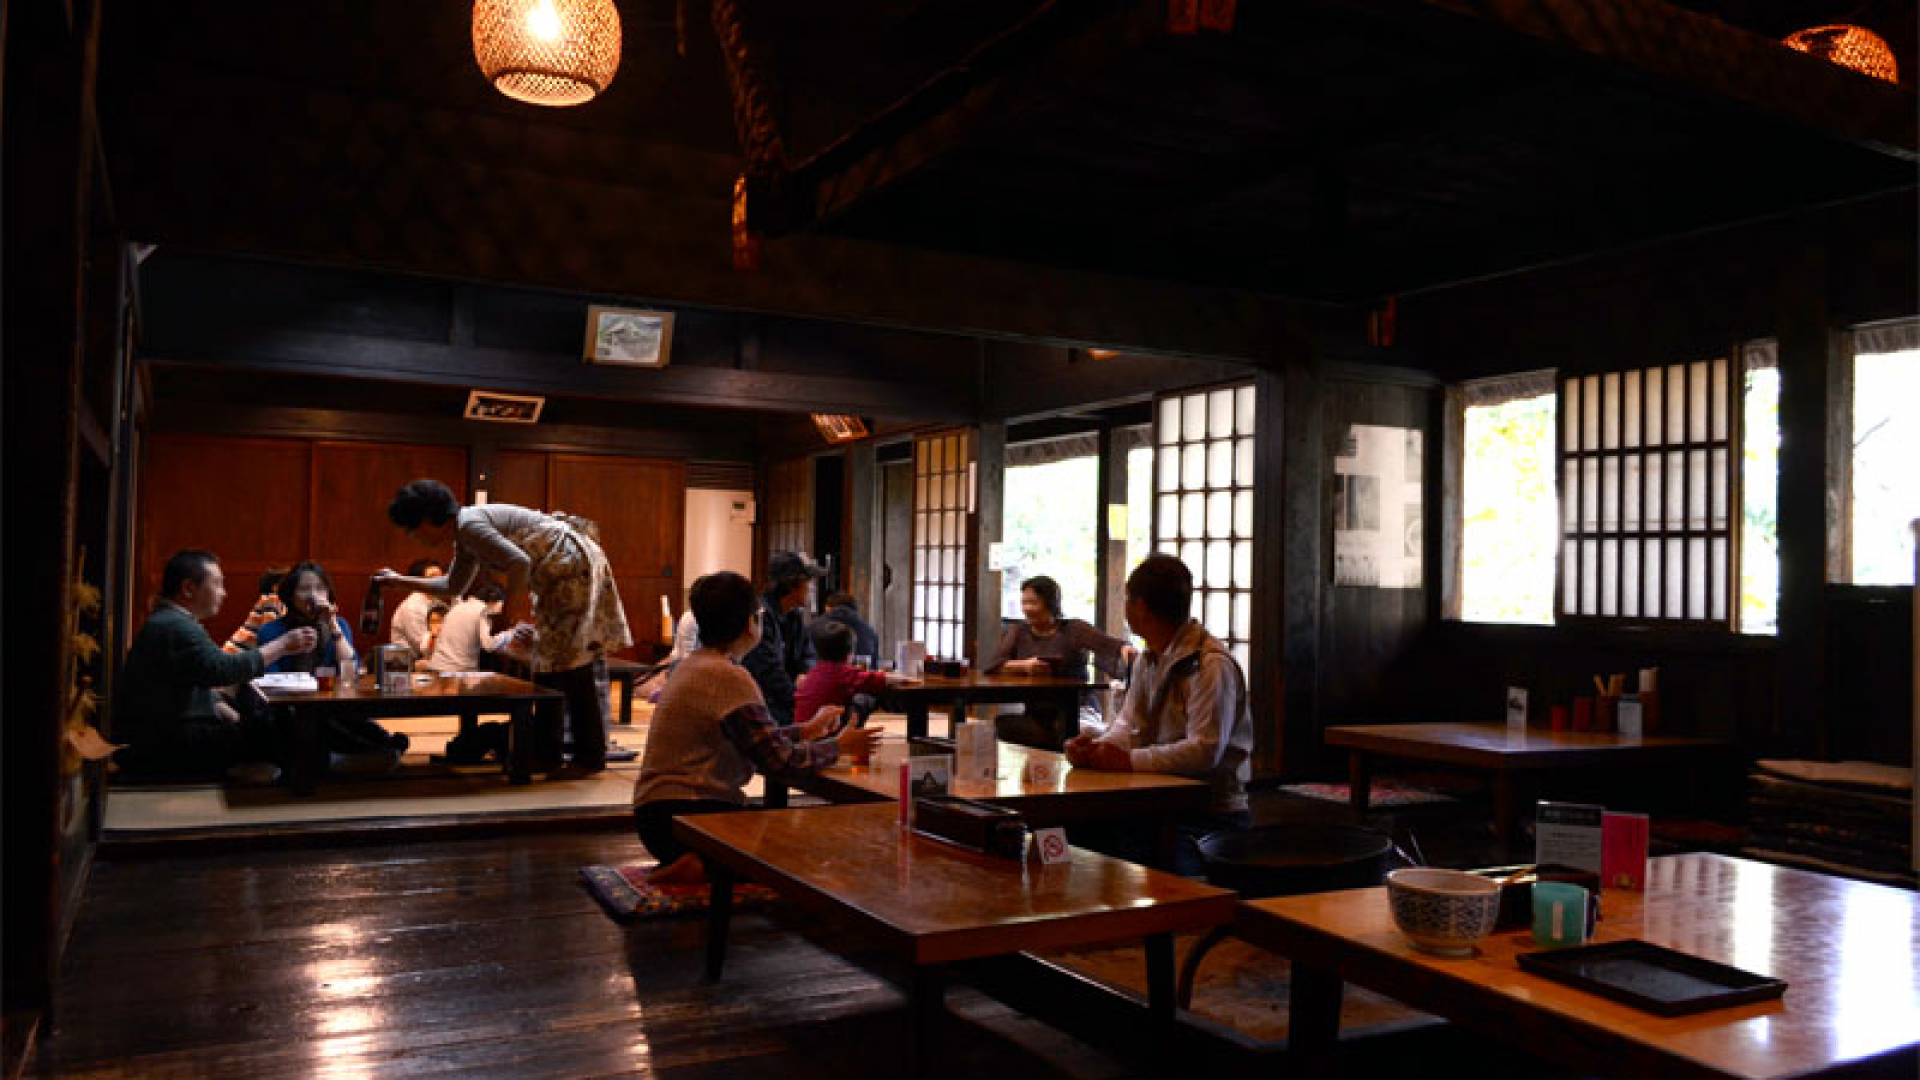 Soba Noodle Restaurant "Shirakawa-go" (inside Nihon Minka-en)